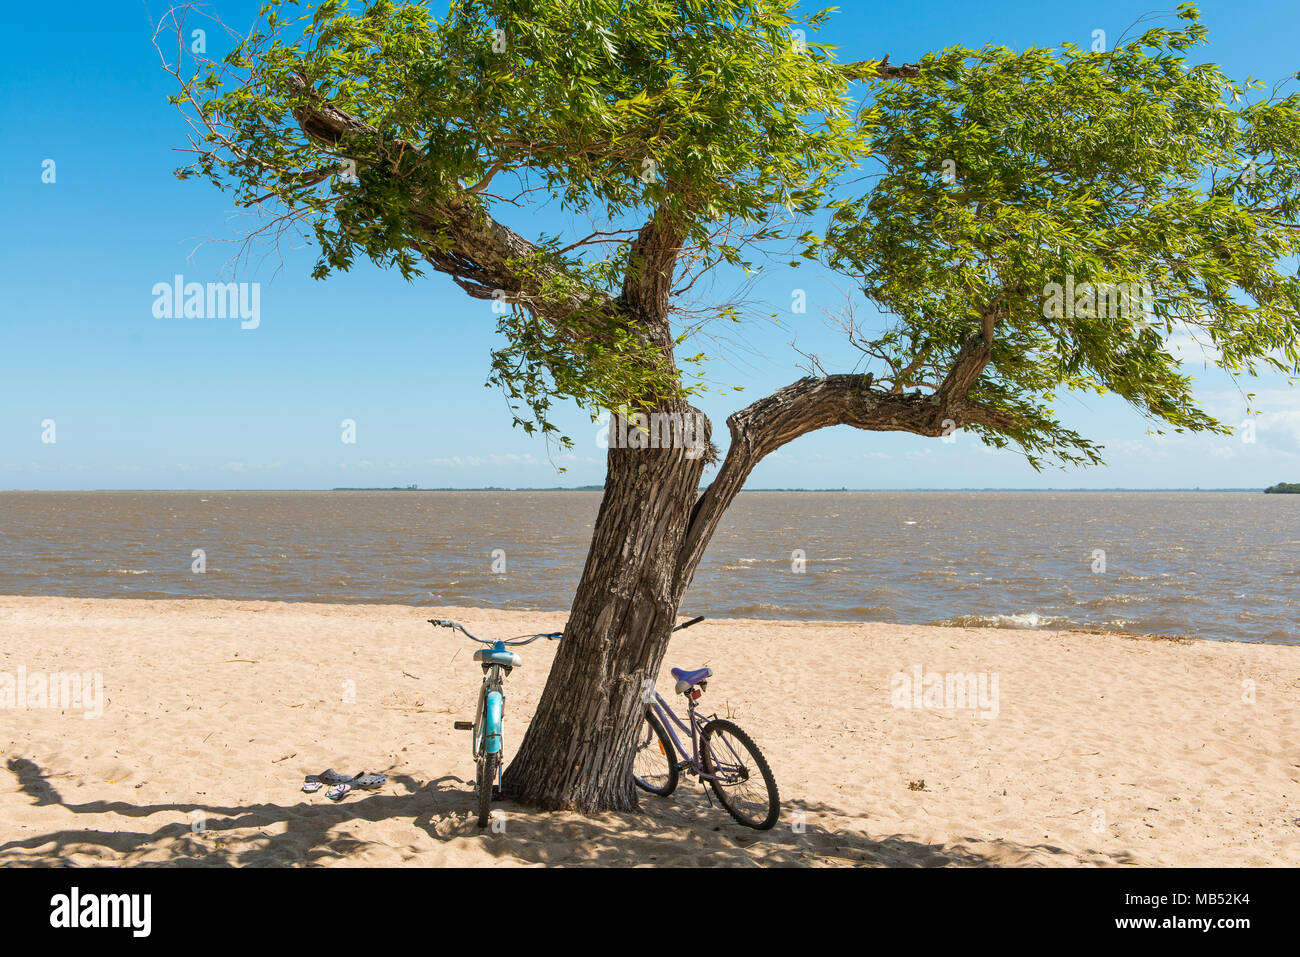 Two bicycles leaning against a tree on the sandy beach of the Rio de la Plata, Colonia del Sacramento, Uruguay Stock Photo